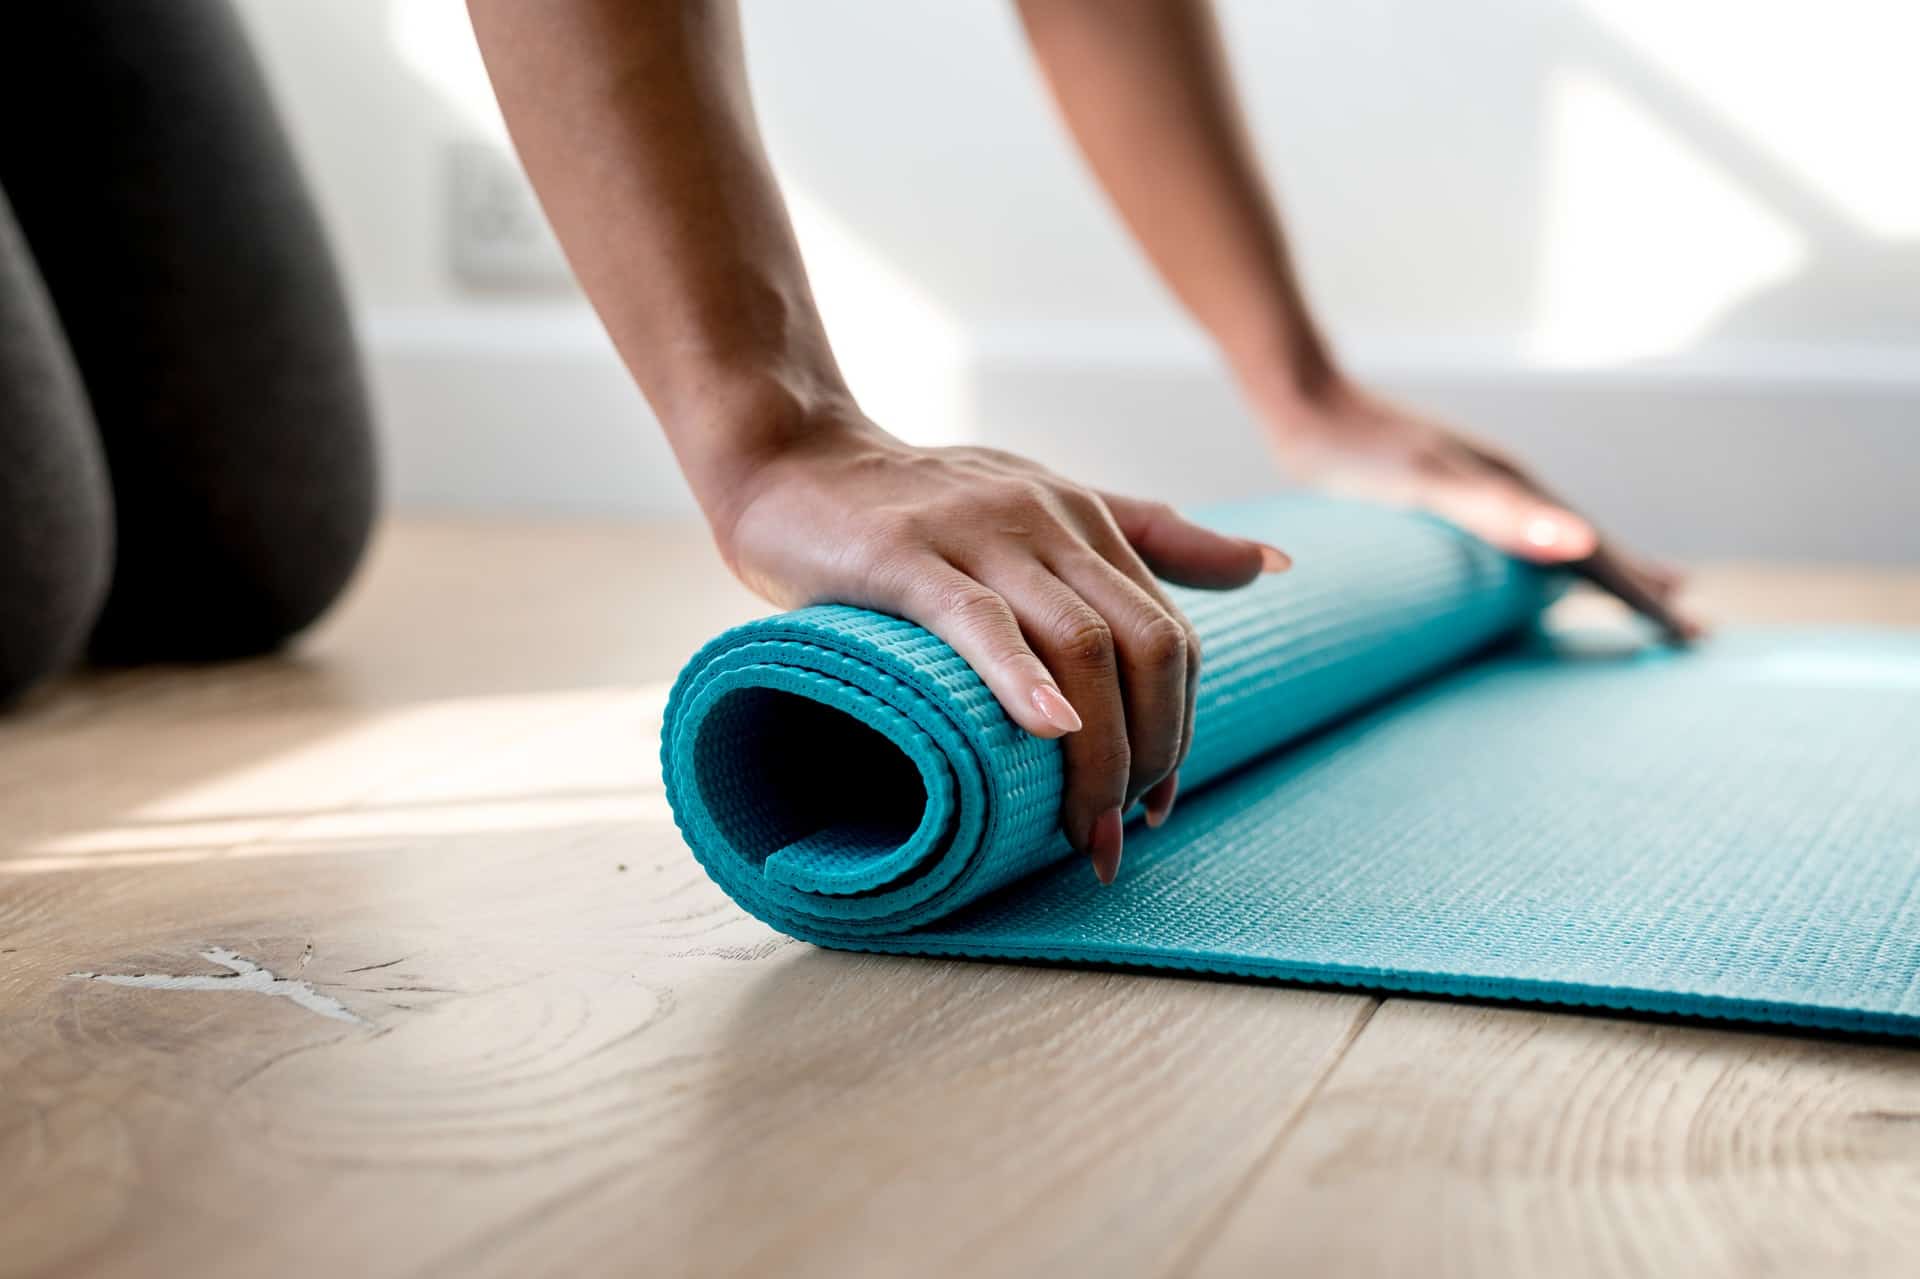 Hands rolling up a yoga mat.